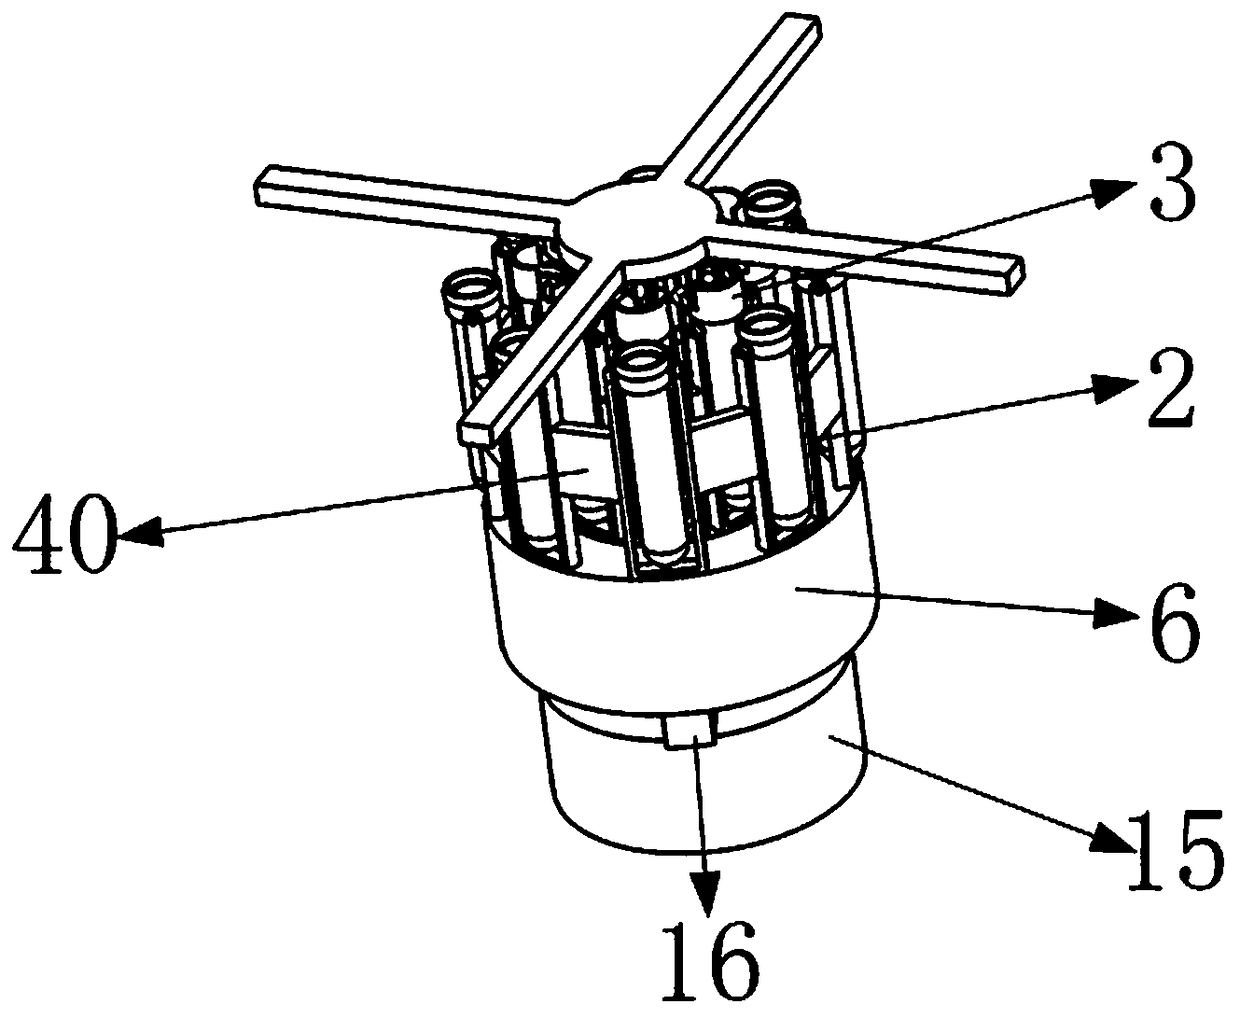 Dual-row-test-tube automatic adjusting centrifugal machine based on gear transmission